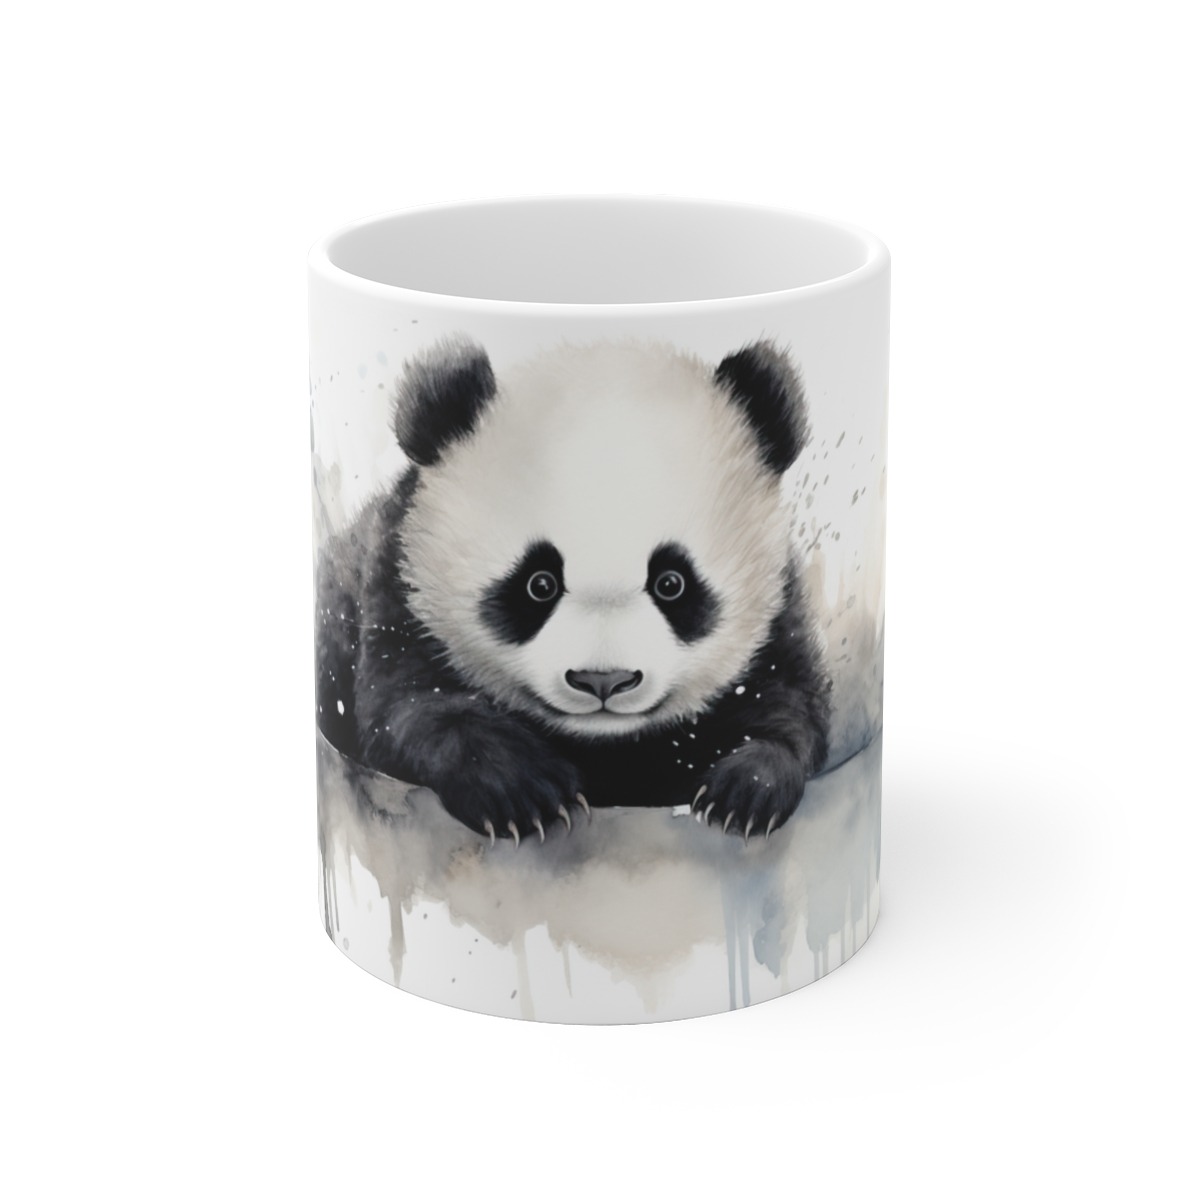 Pandabär im Aquarell-Stil auf weißer Keramiktasse